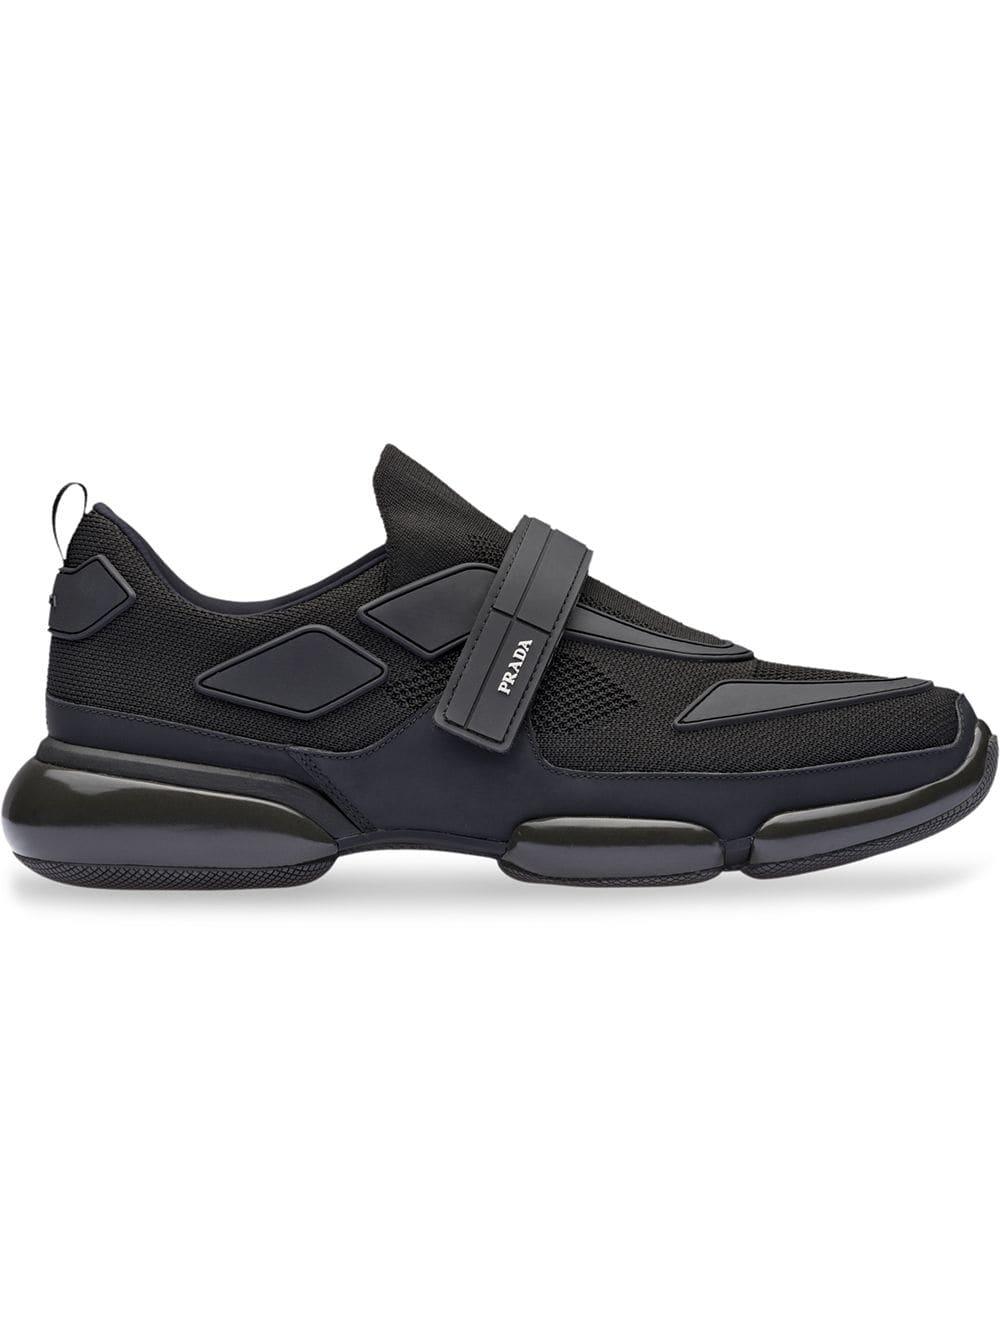 Prada Cloudbust Sneakers in Black for Men - Lyst